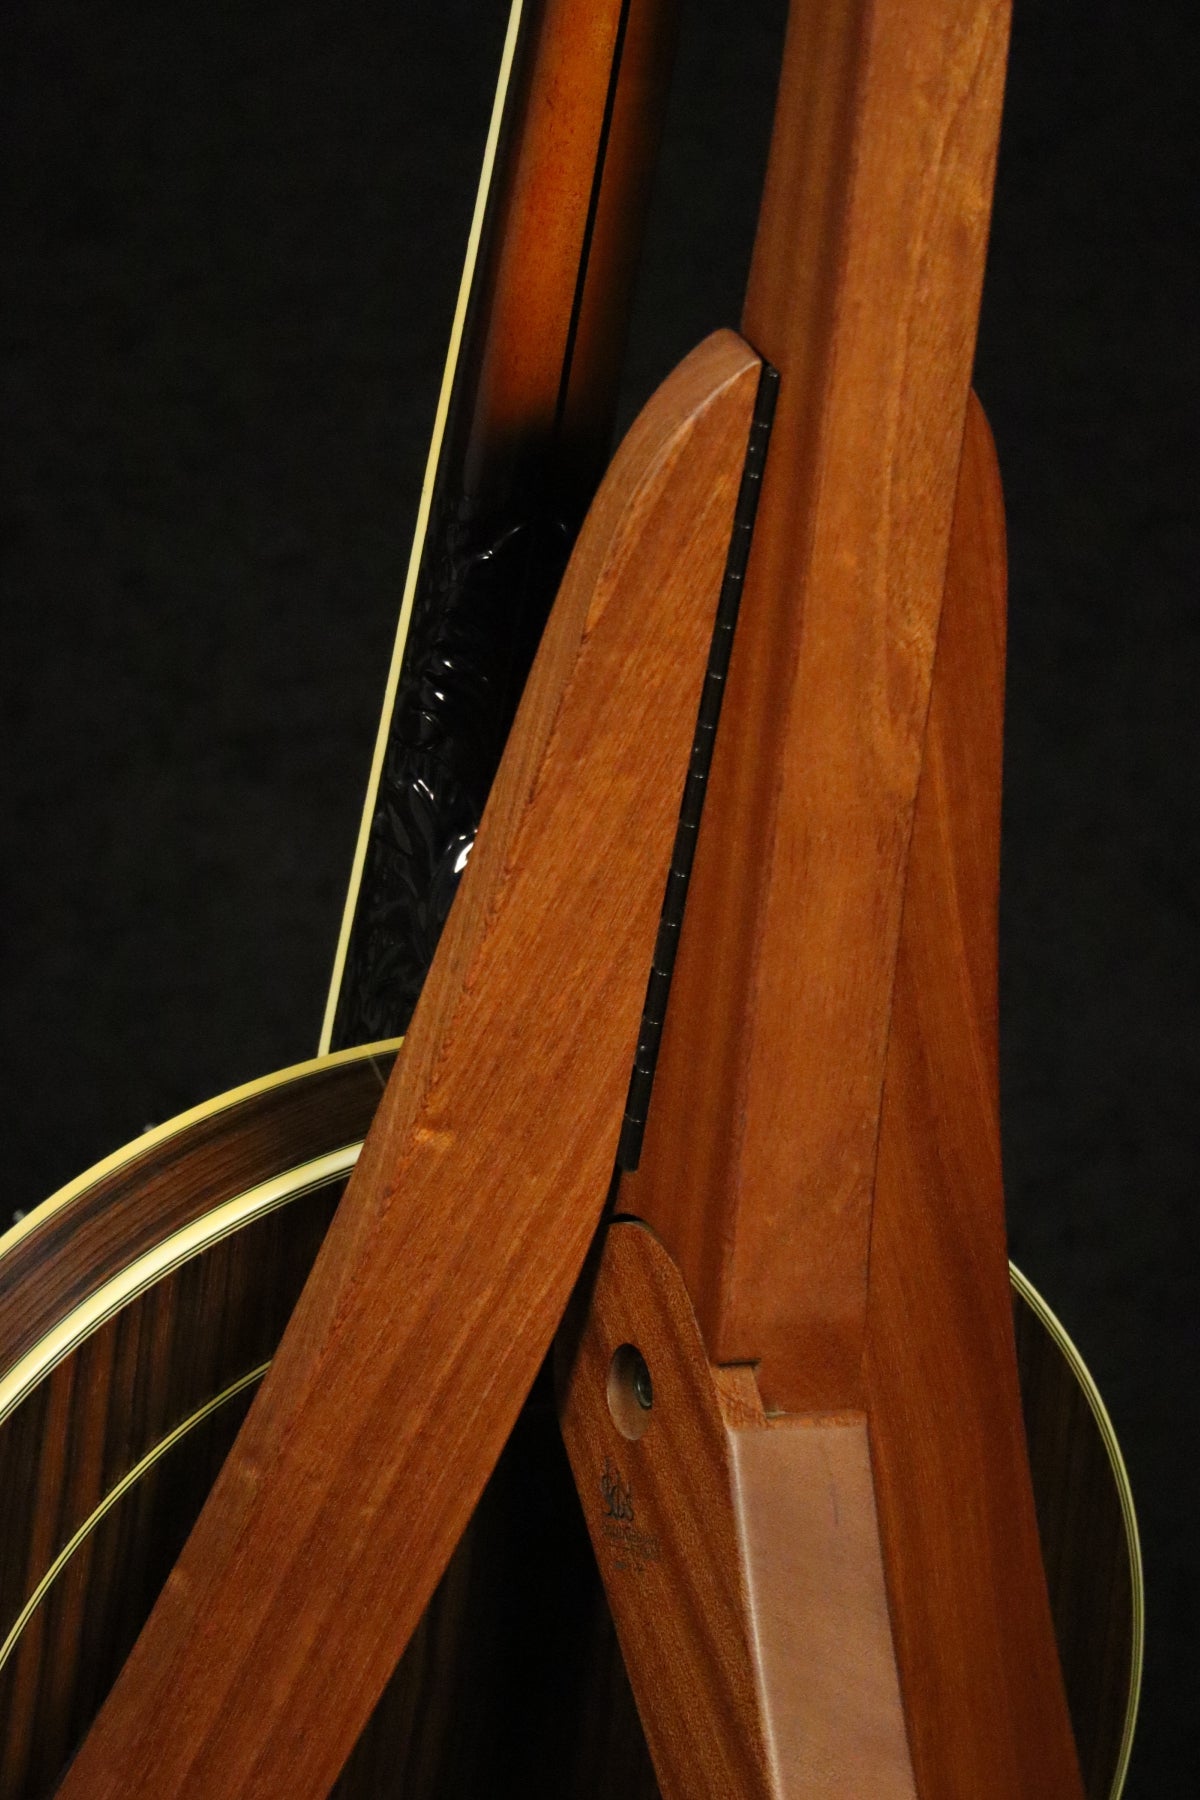 Folding sapele mahogany wood banjo floor stand closeup rear image with Alvarez banjo